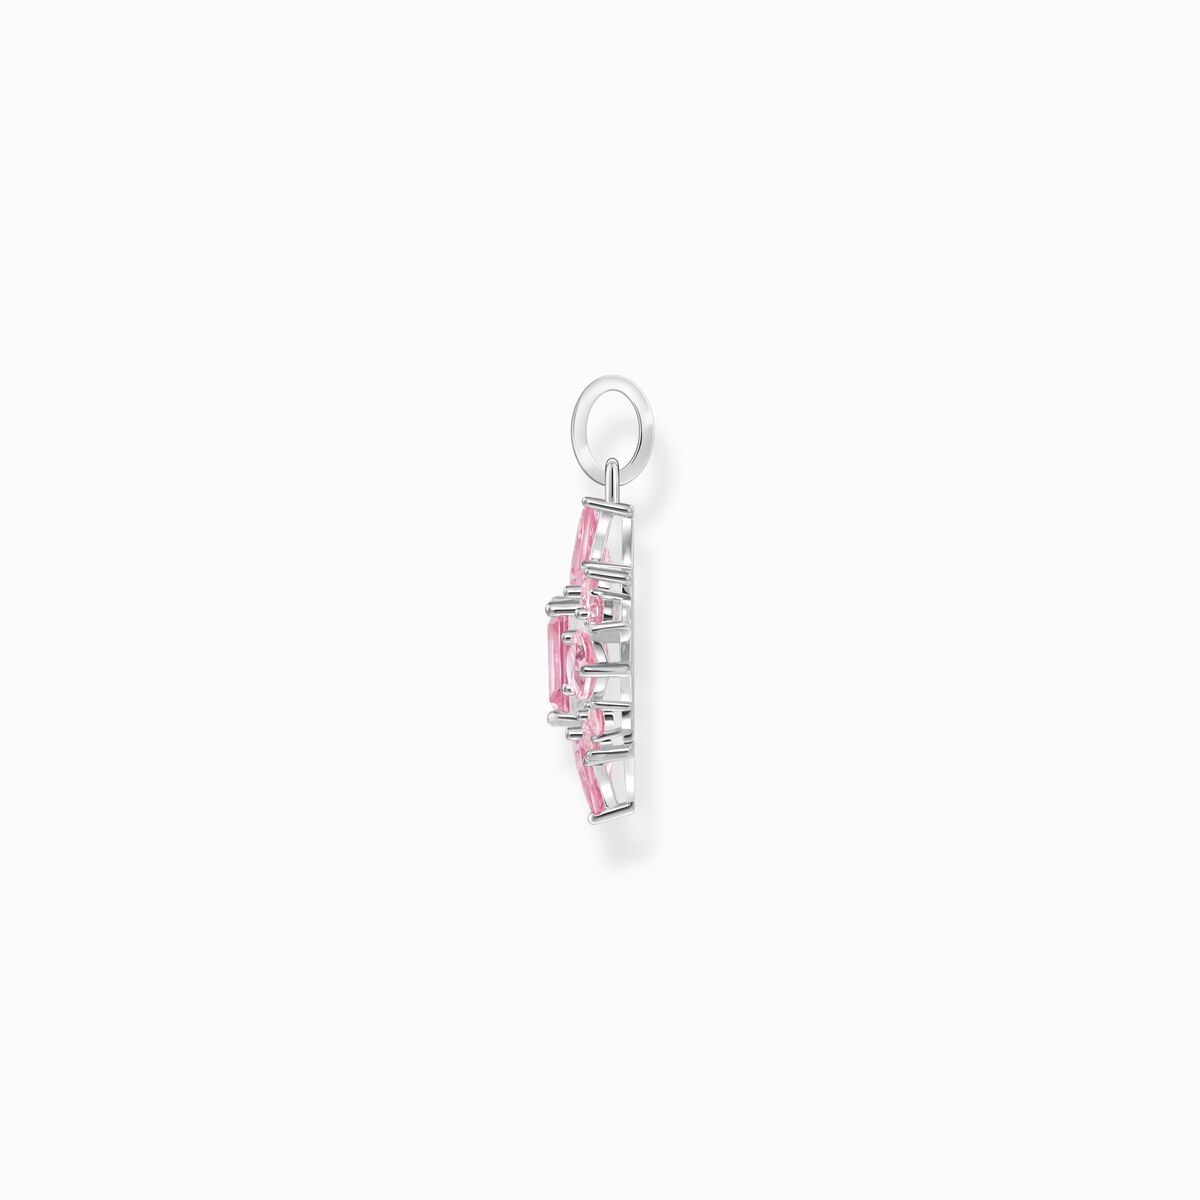 Silver pendant with pink zirconia stones